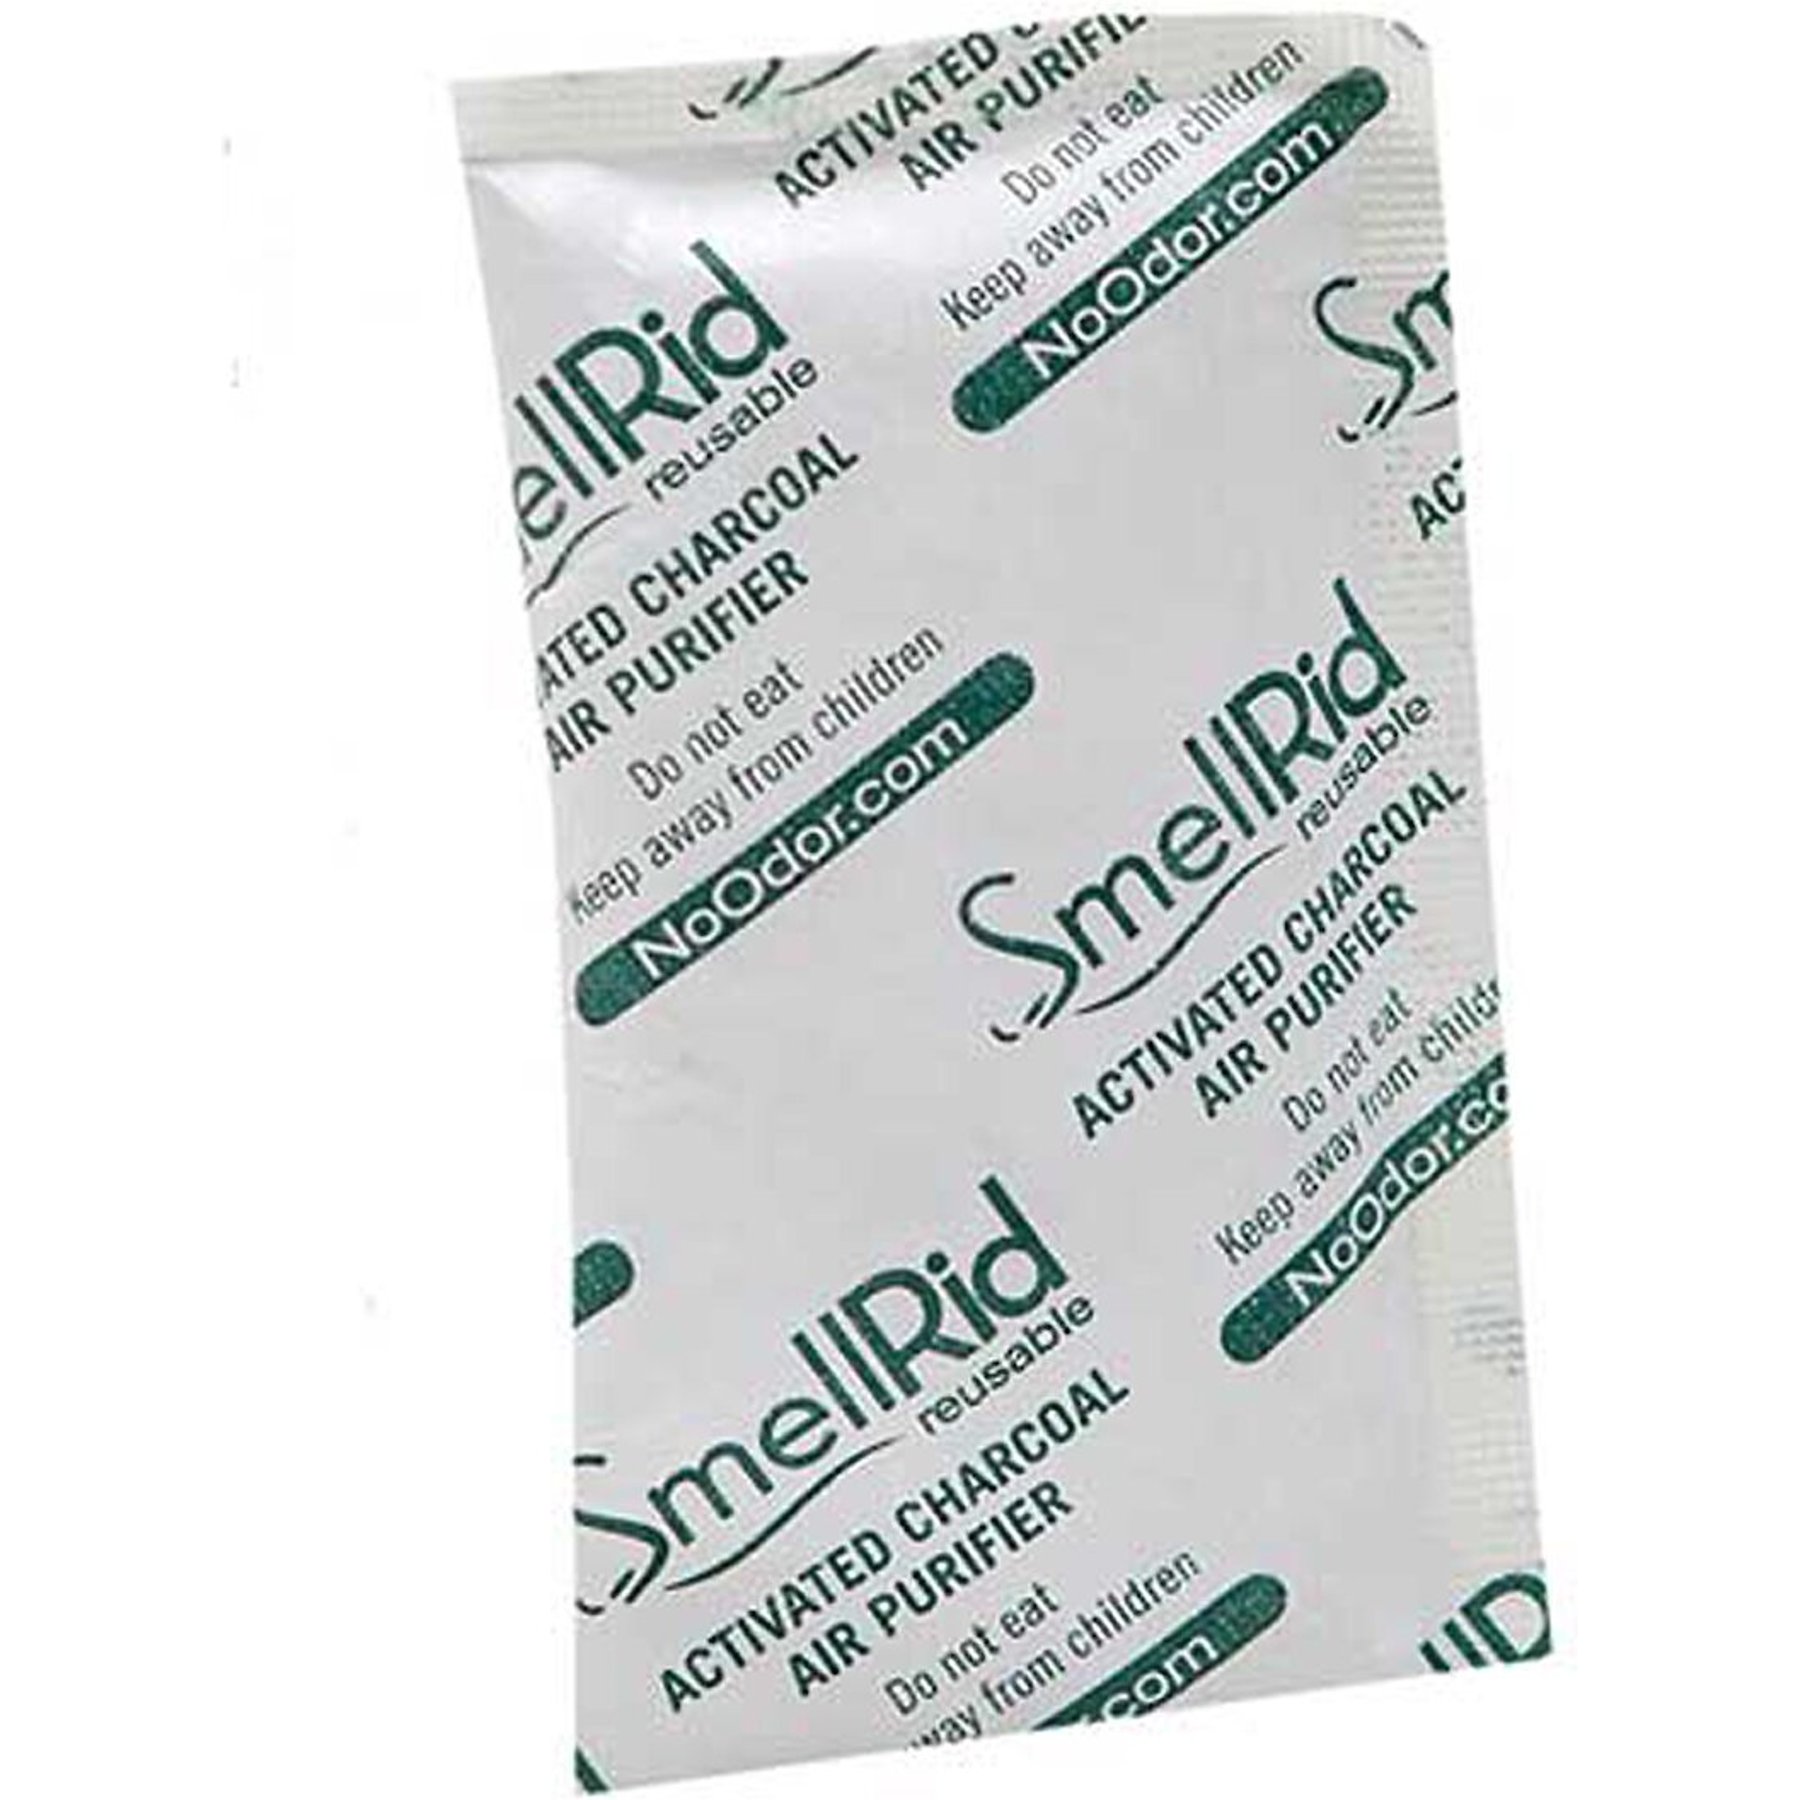 SMELLRID Reusable Activated Charcoal Purifier Medium, count Air 10 & Eliminator Pads, Odor